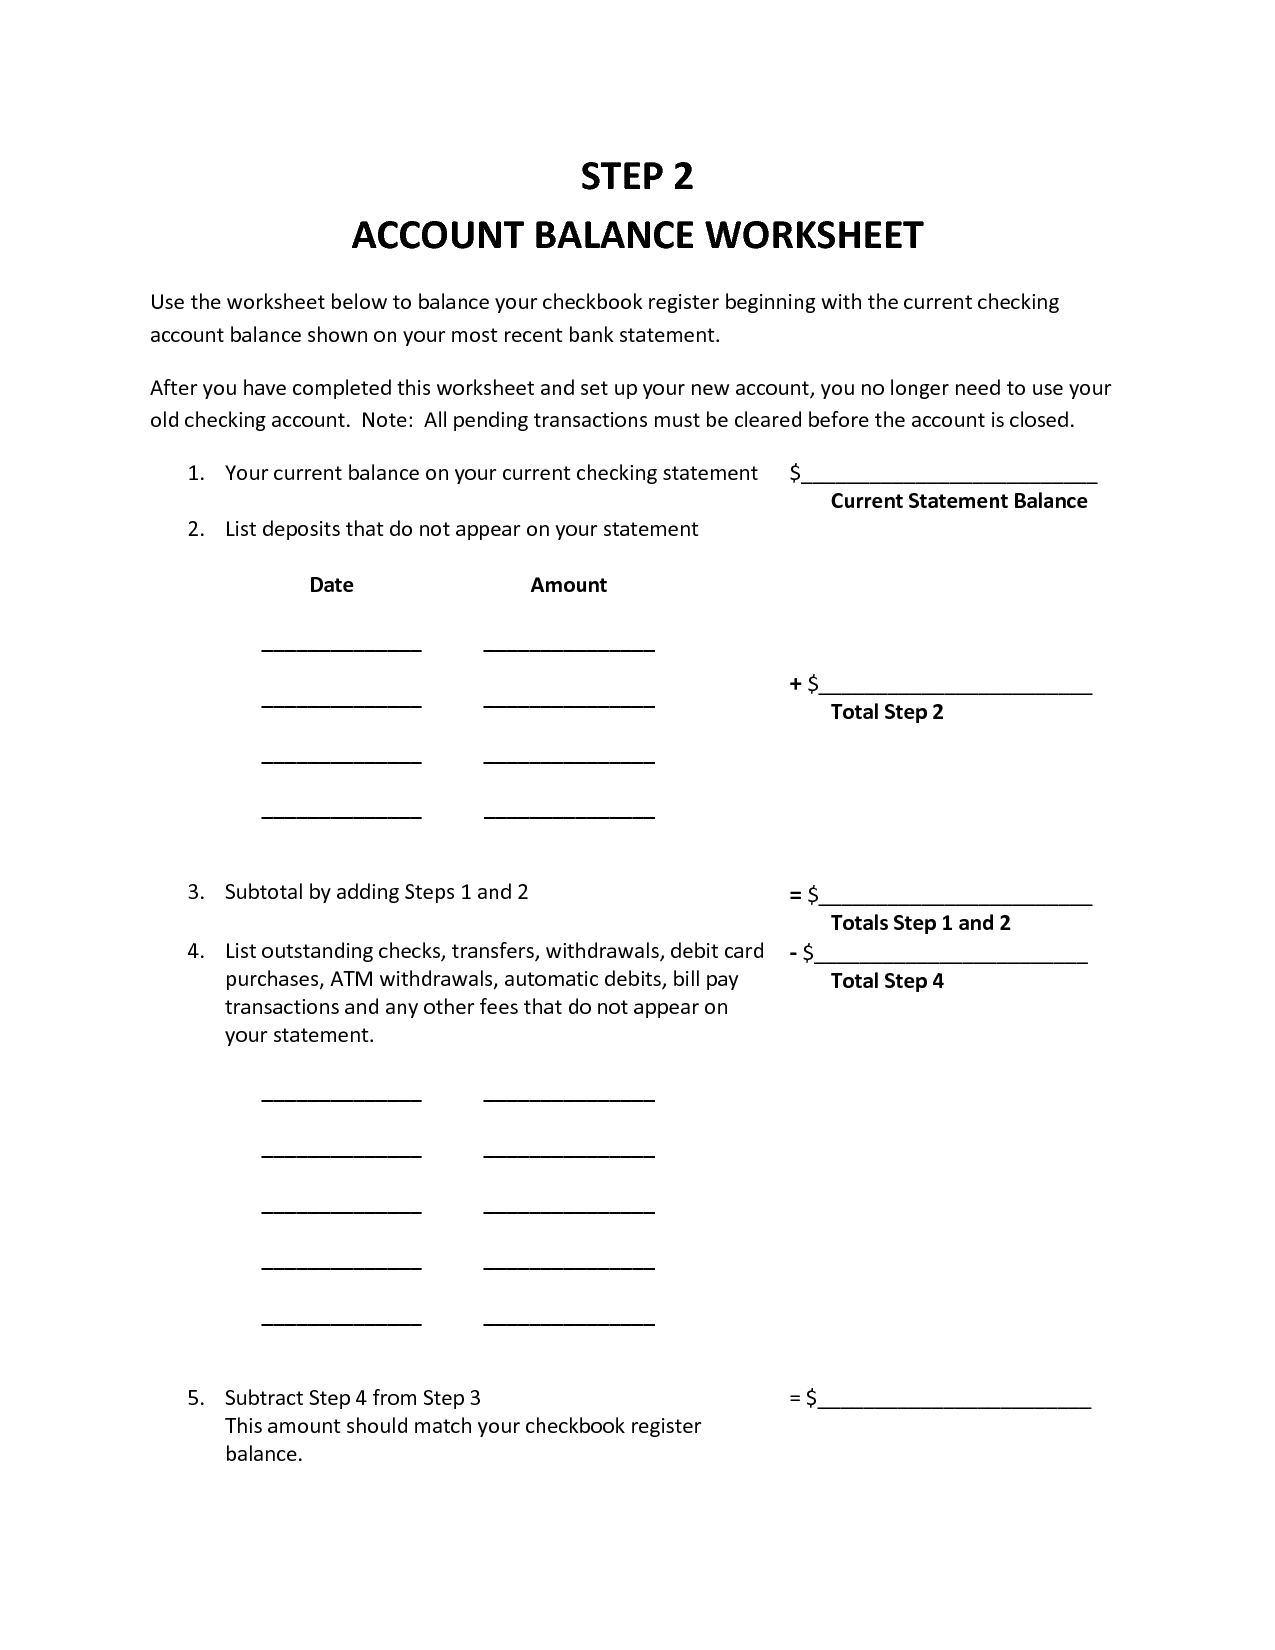 Account Balance Worksheet